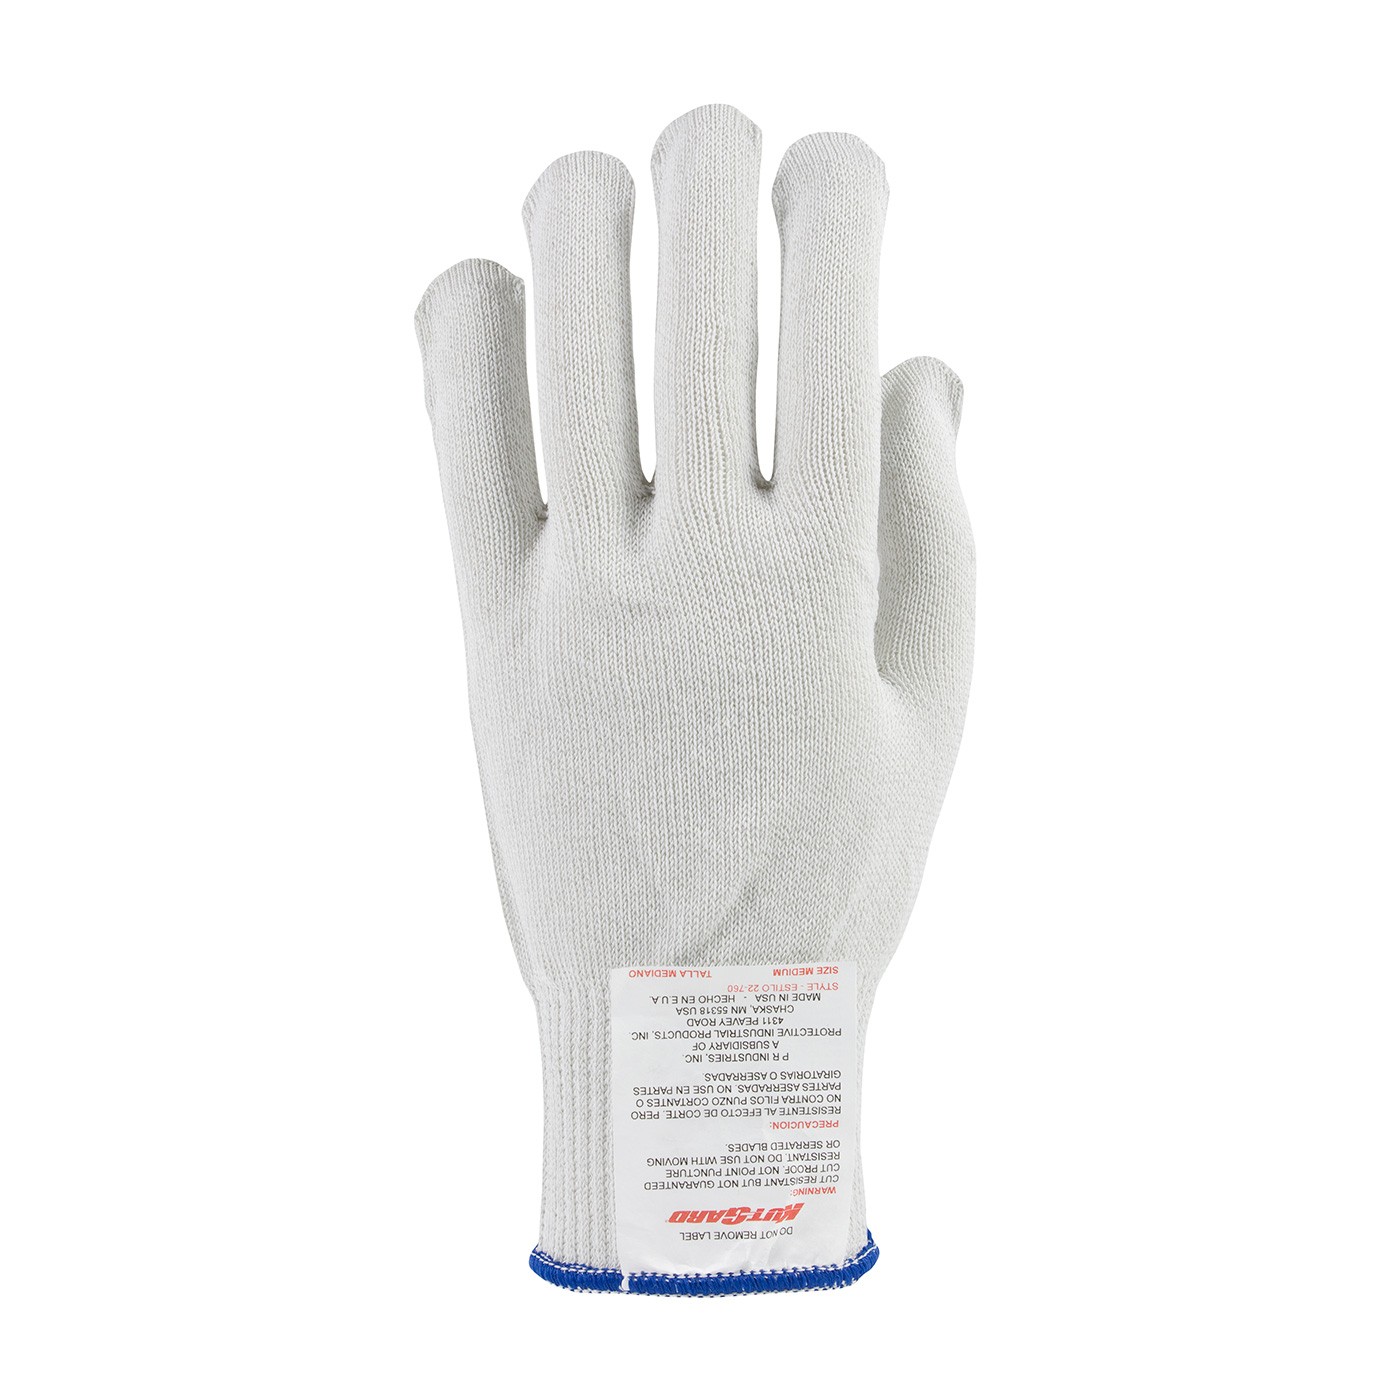 Kut Gard® Seamless Knit Dyneema® Blended Antimicrobial Glove - Medium Weight  (#22-760)